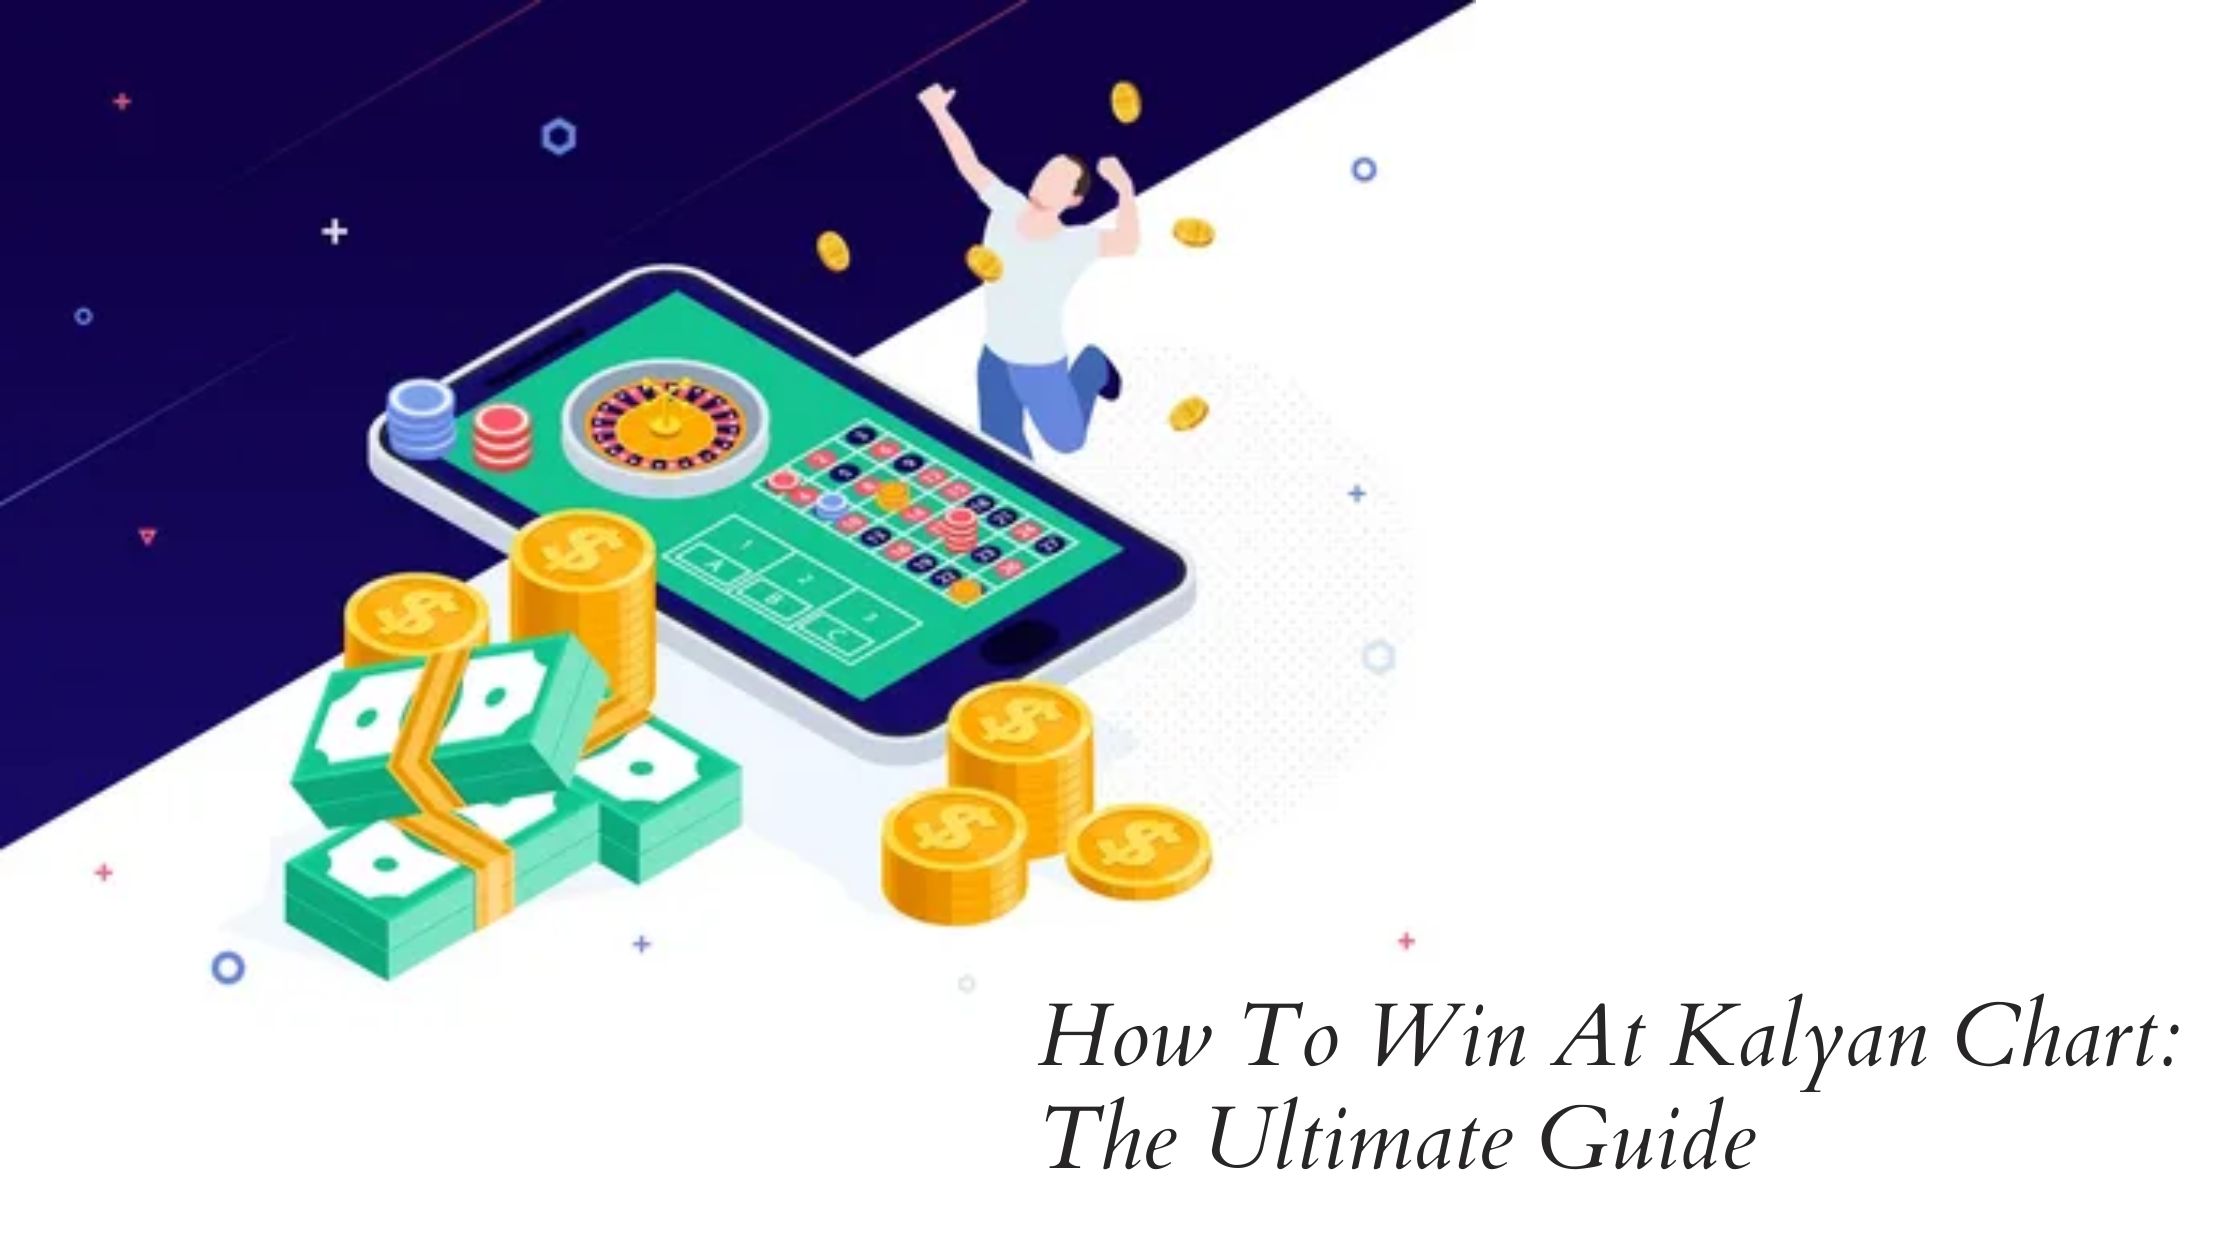 How To Win At Kalyan Chart